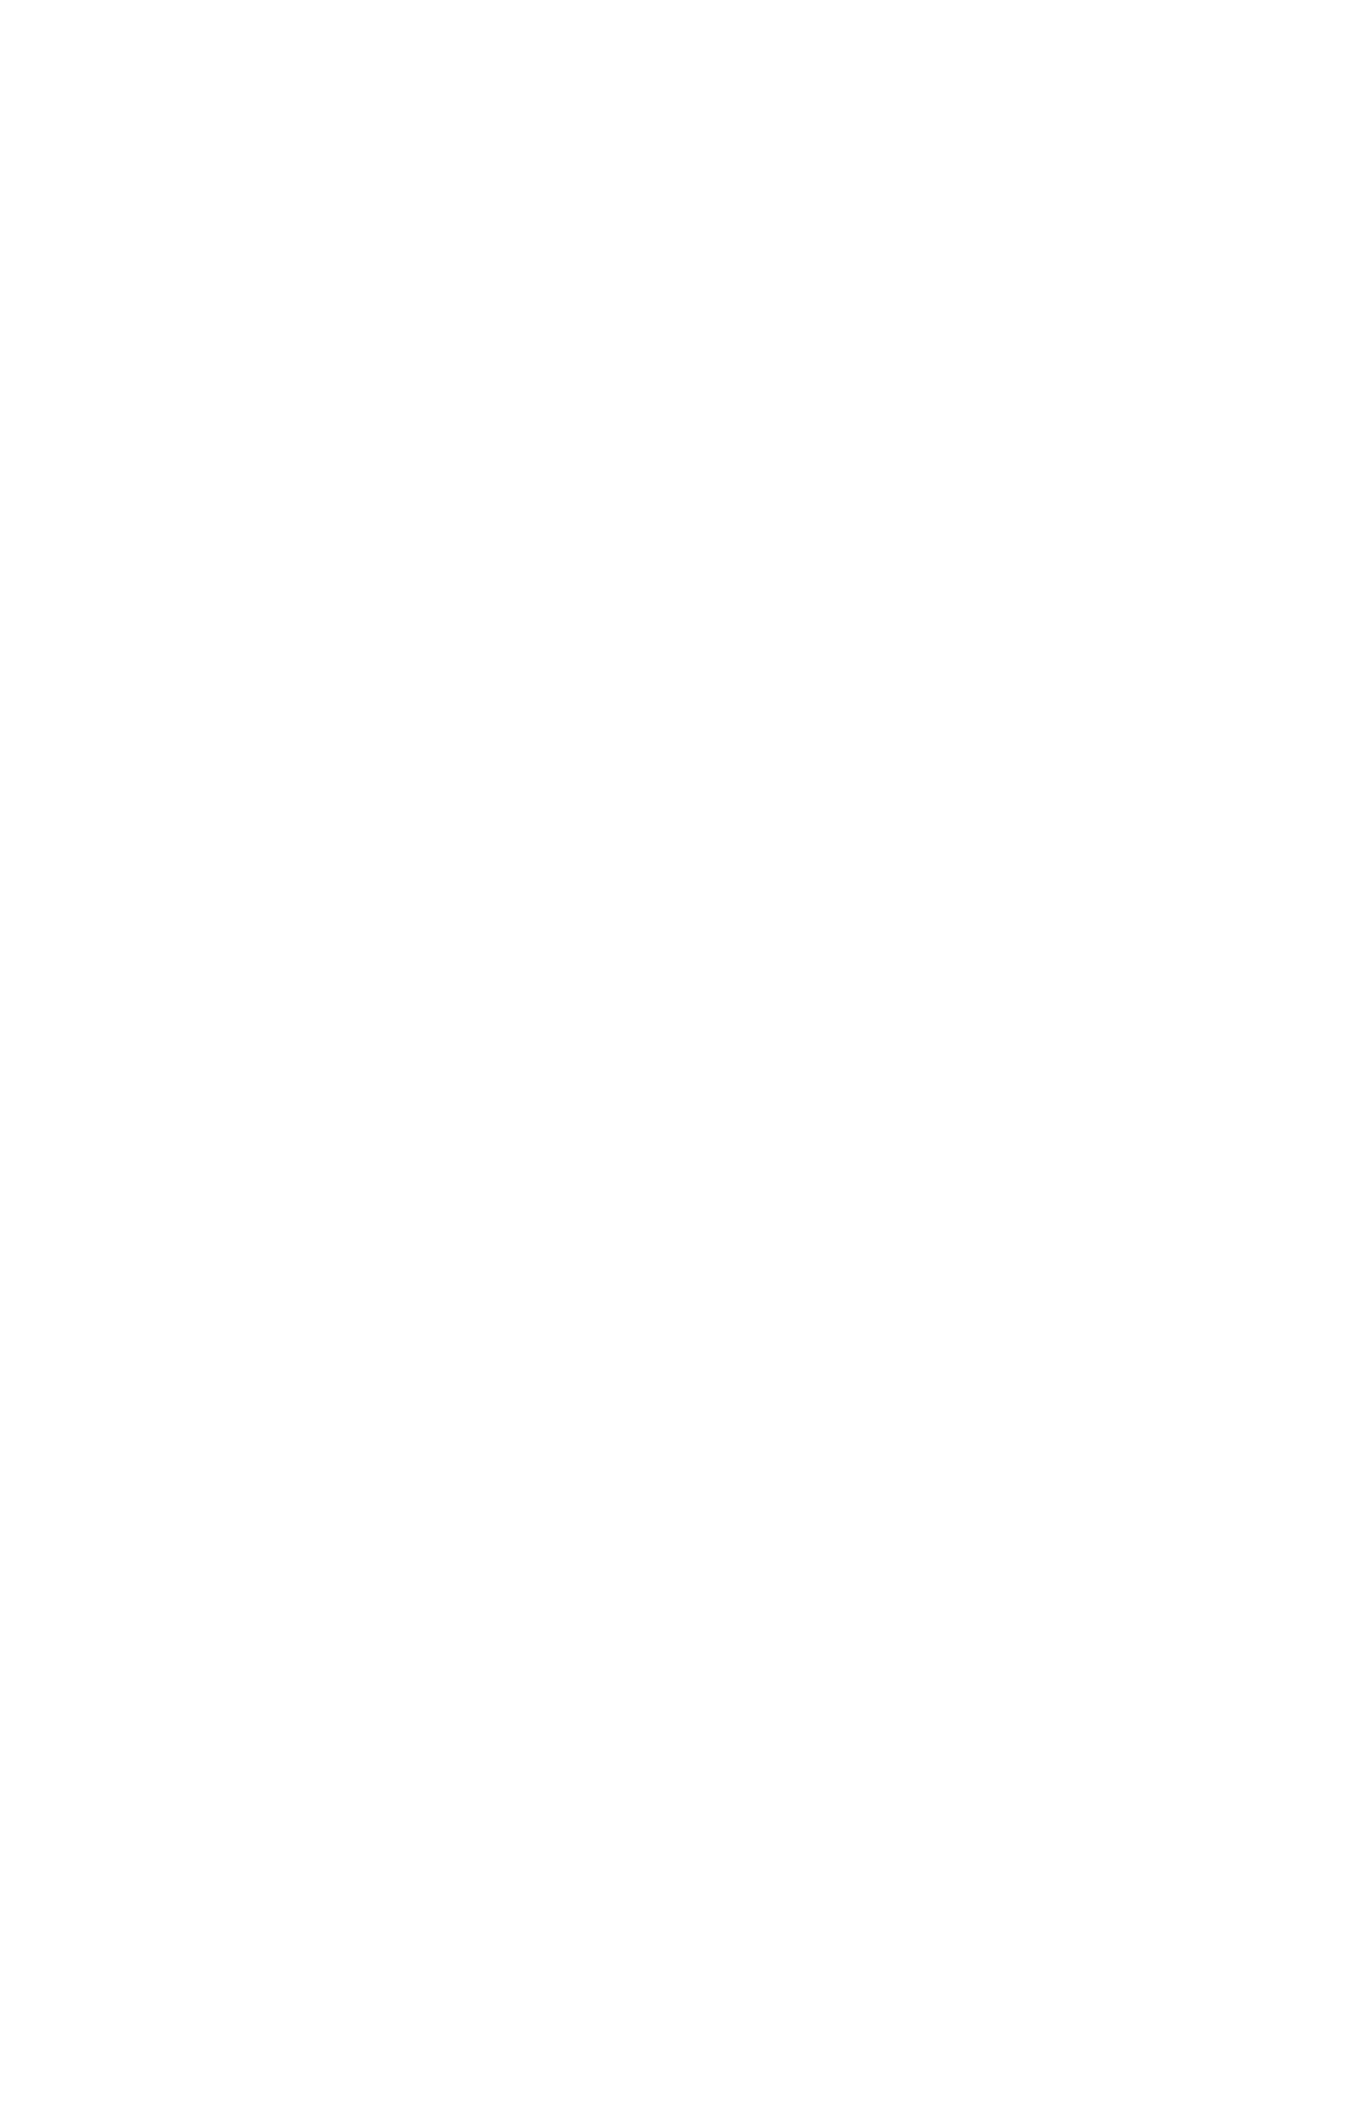 HACR Logo - Vertical White 